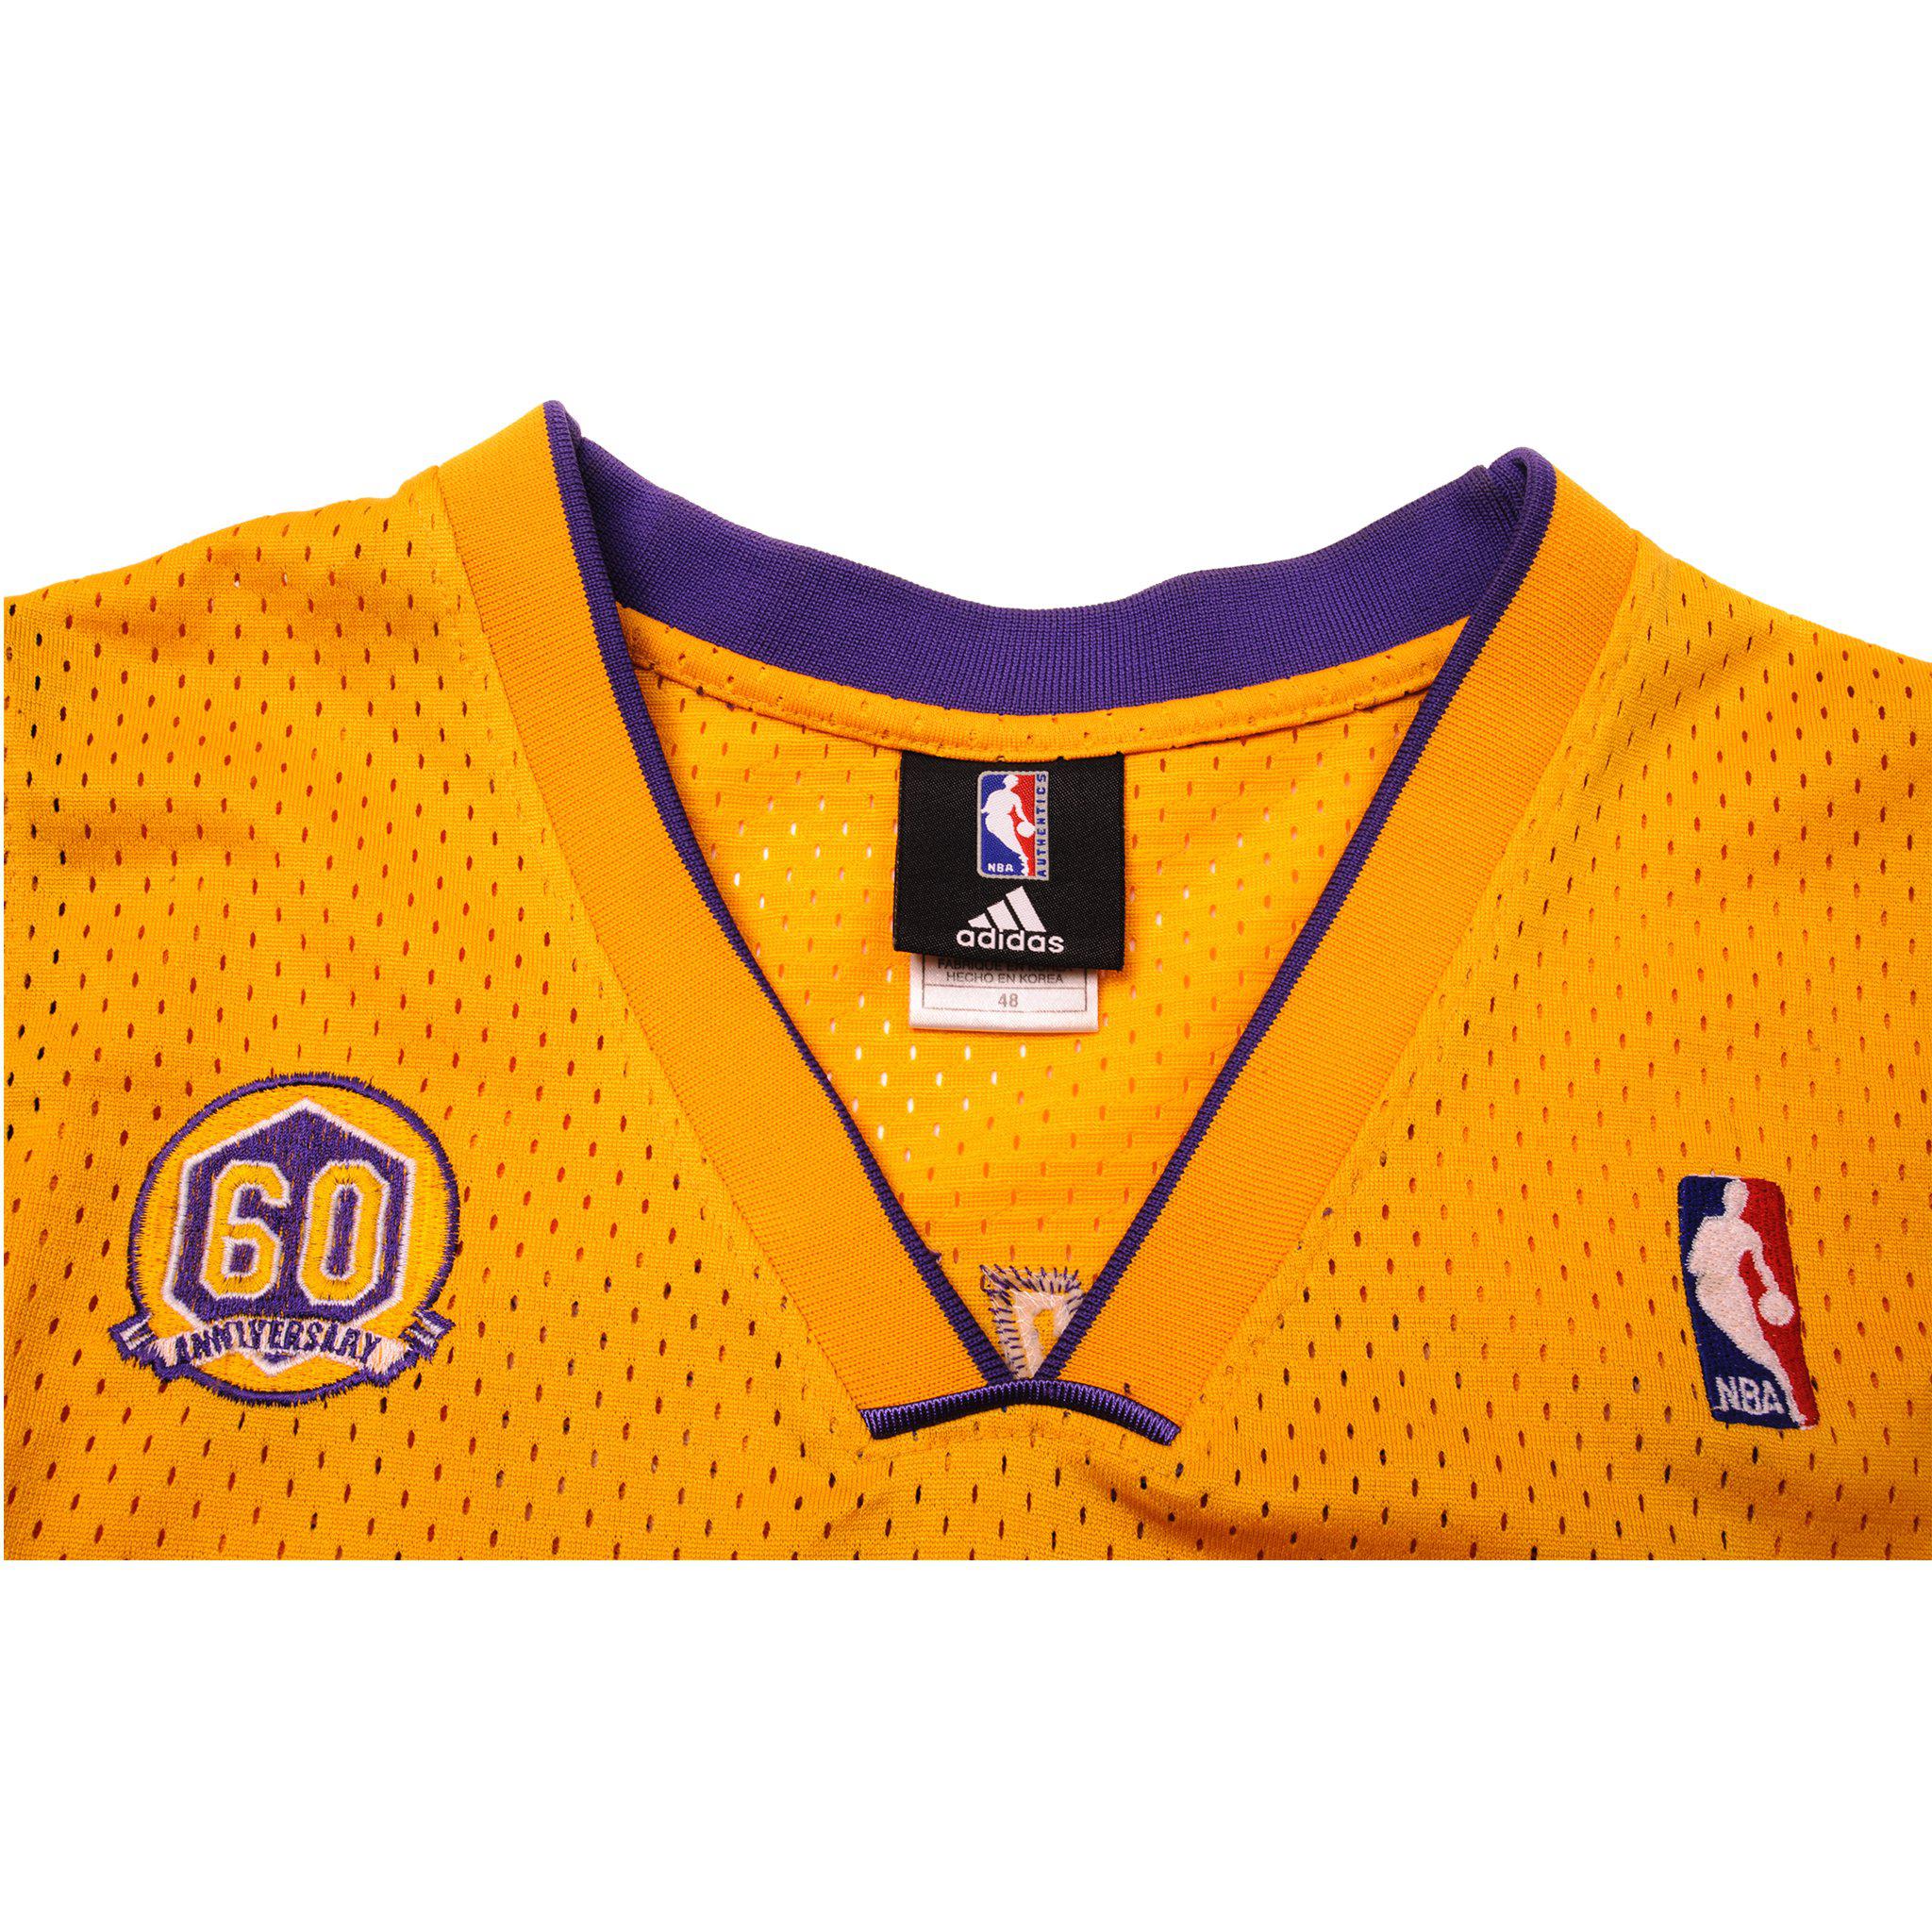 Kobe Lakers Adidas Swingman Jersey on Mercari